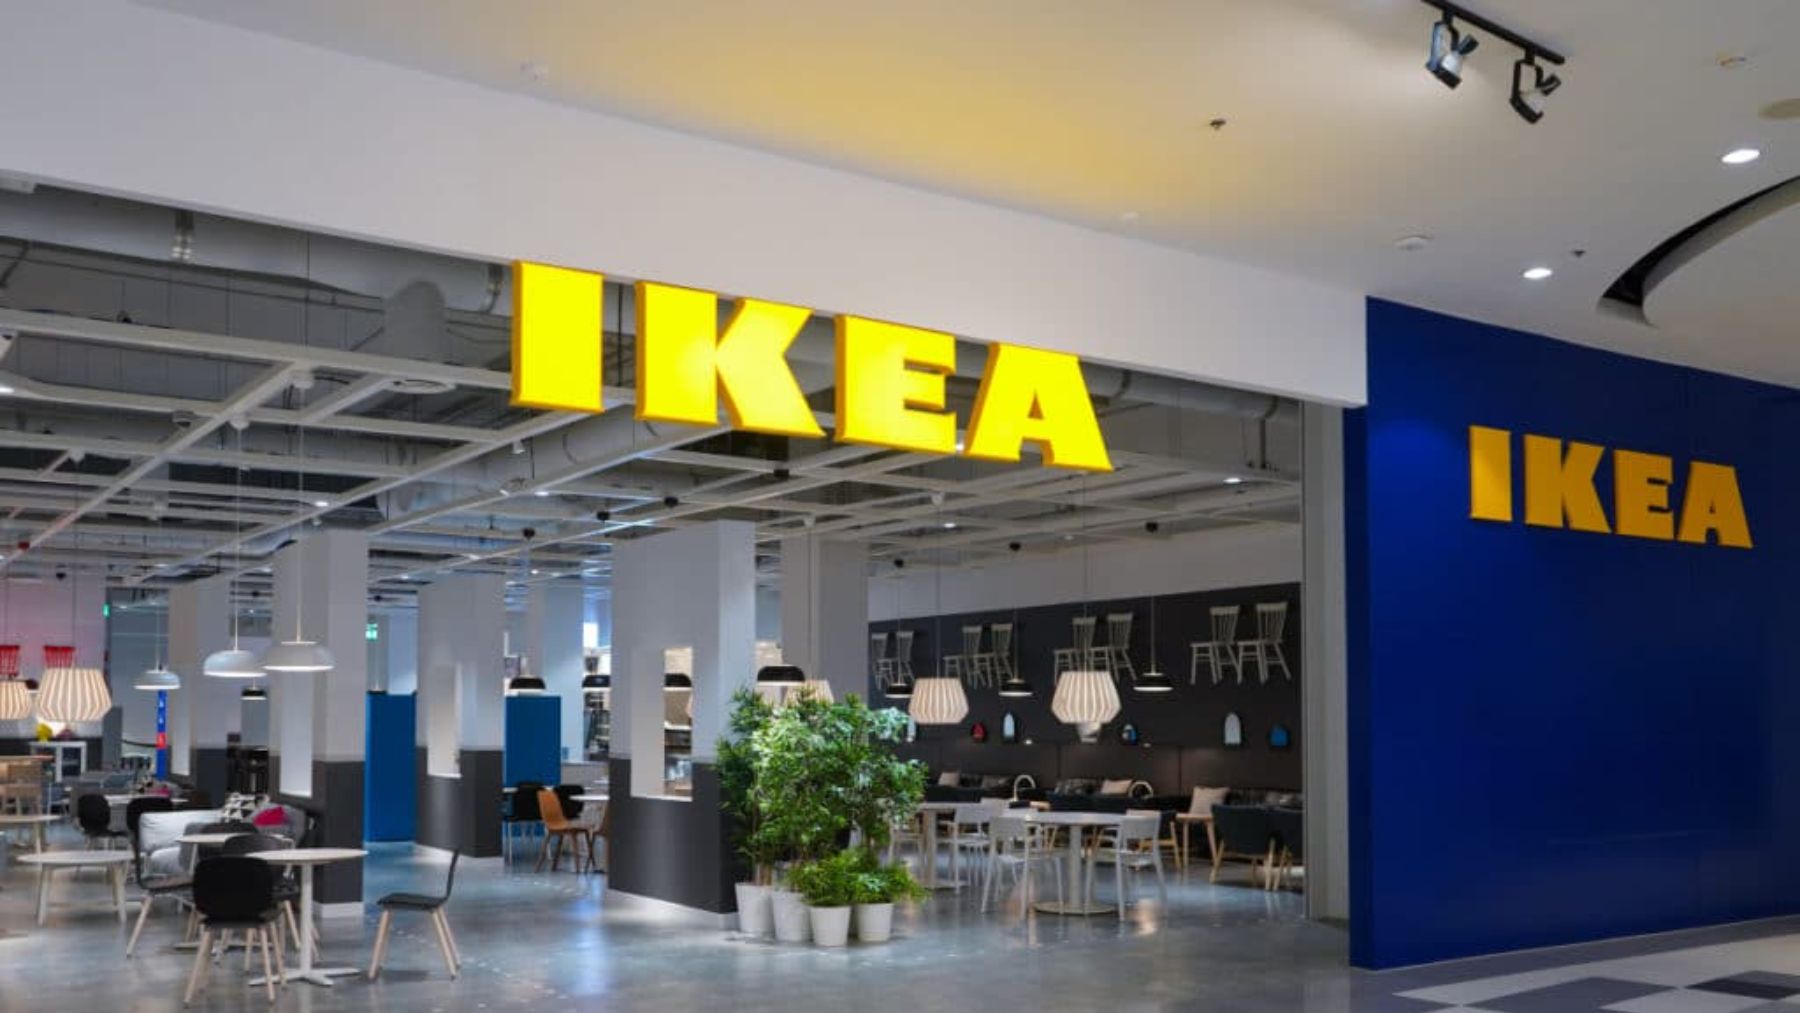 Tienda de Ikea.